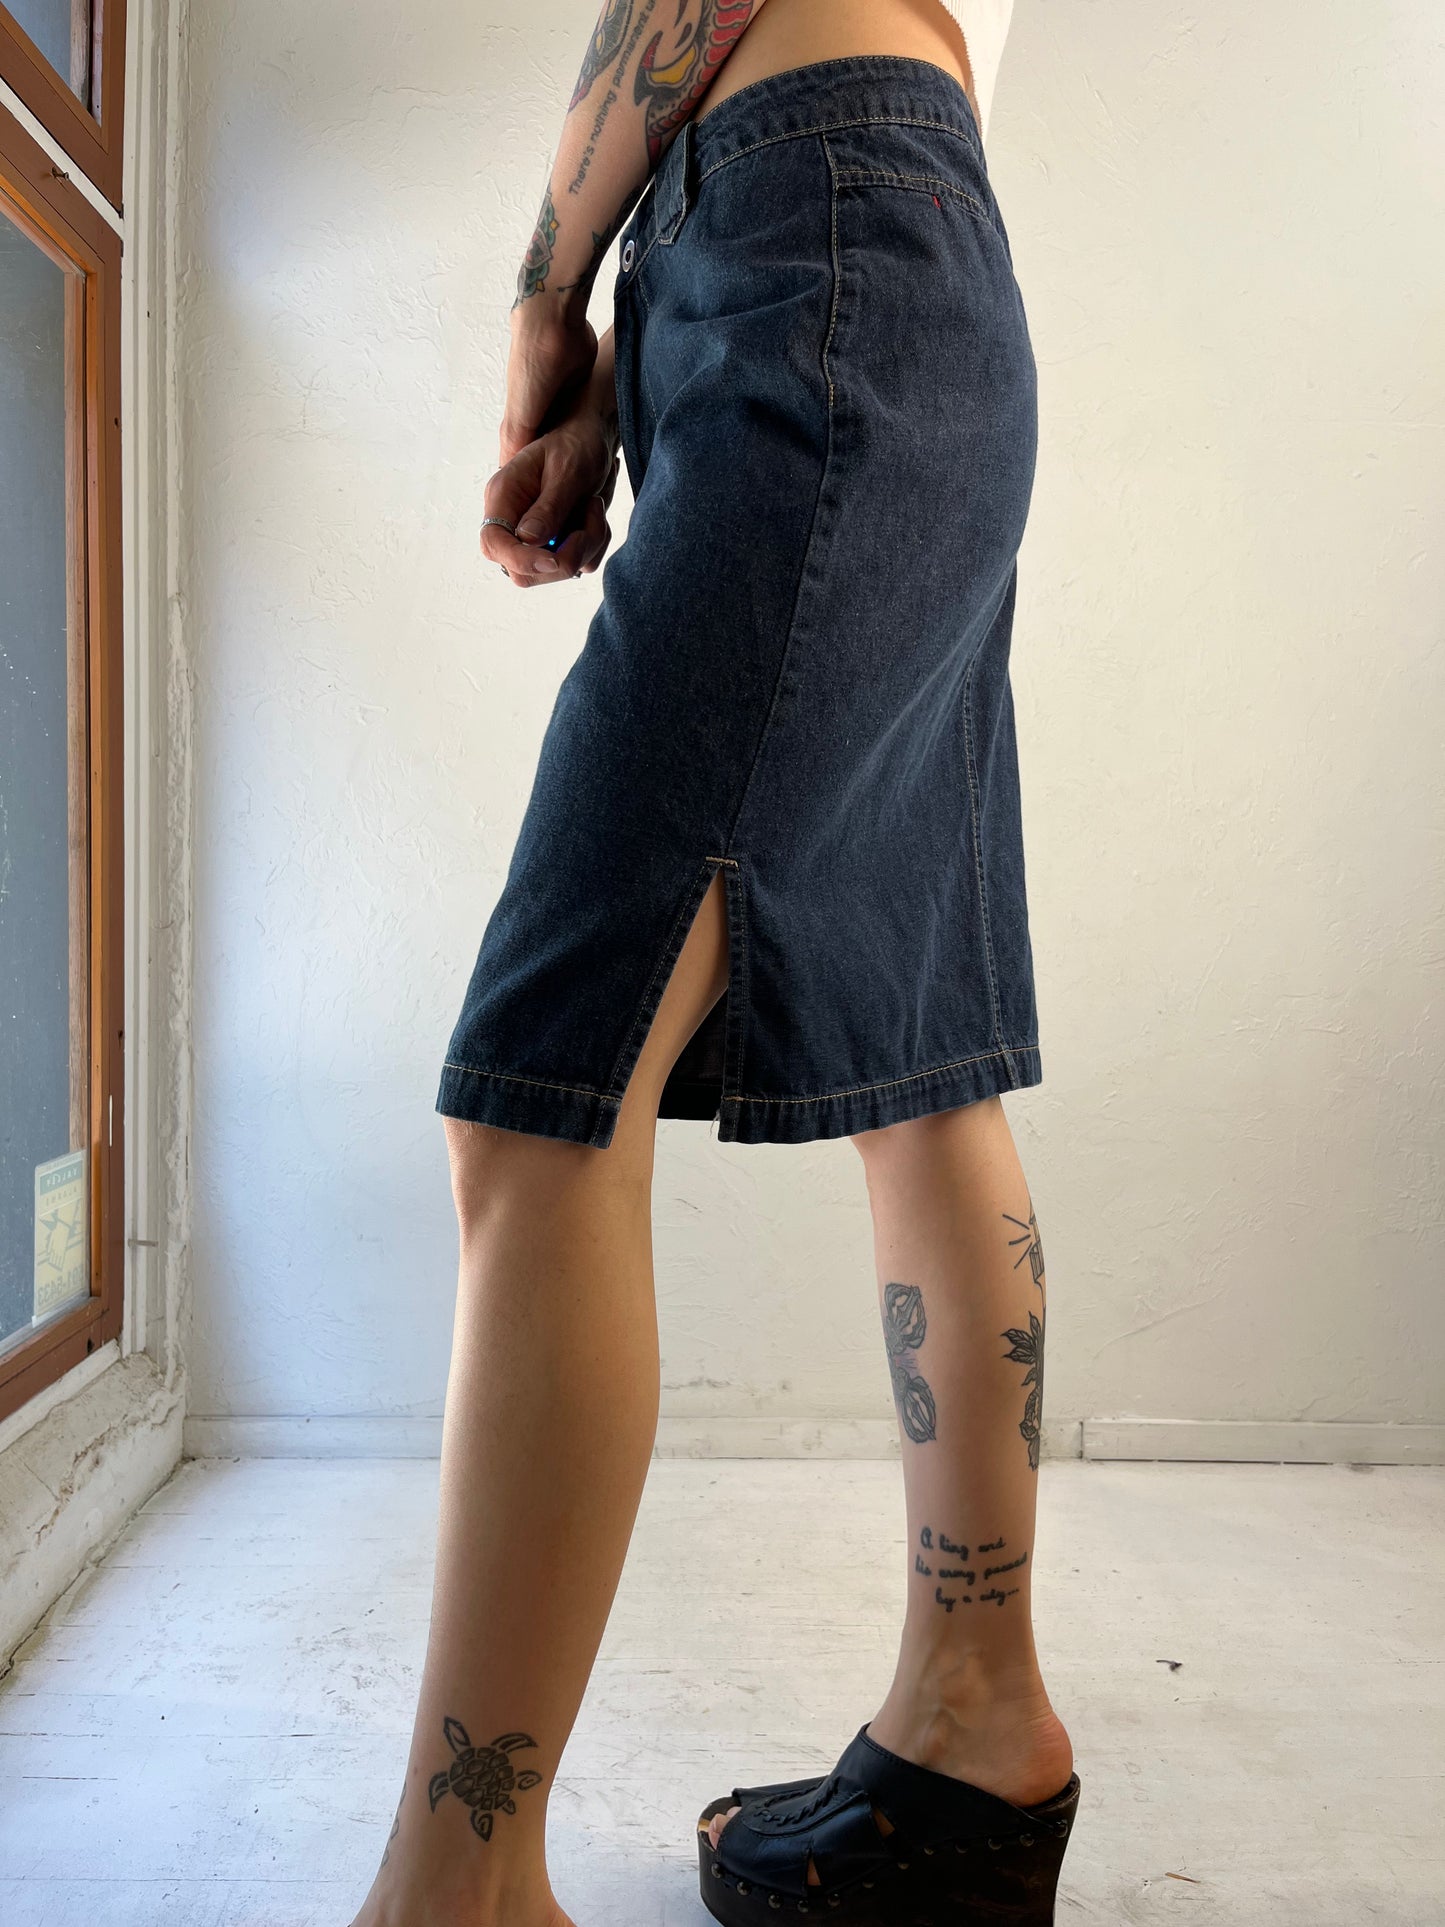 Y2k 'Avon Fashions' Denim Pencil Skirt / Medium